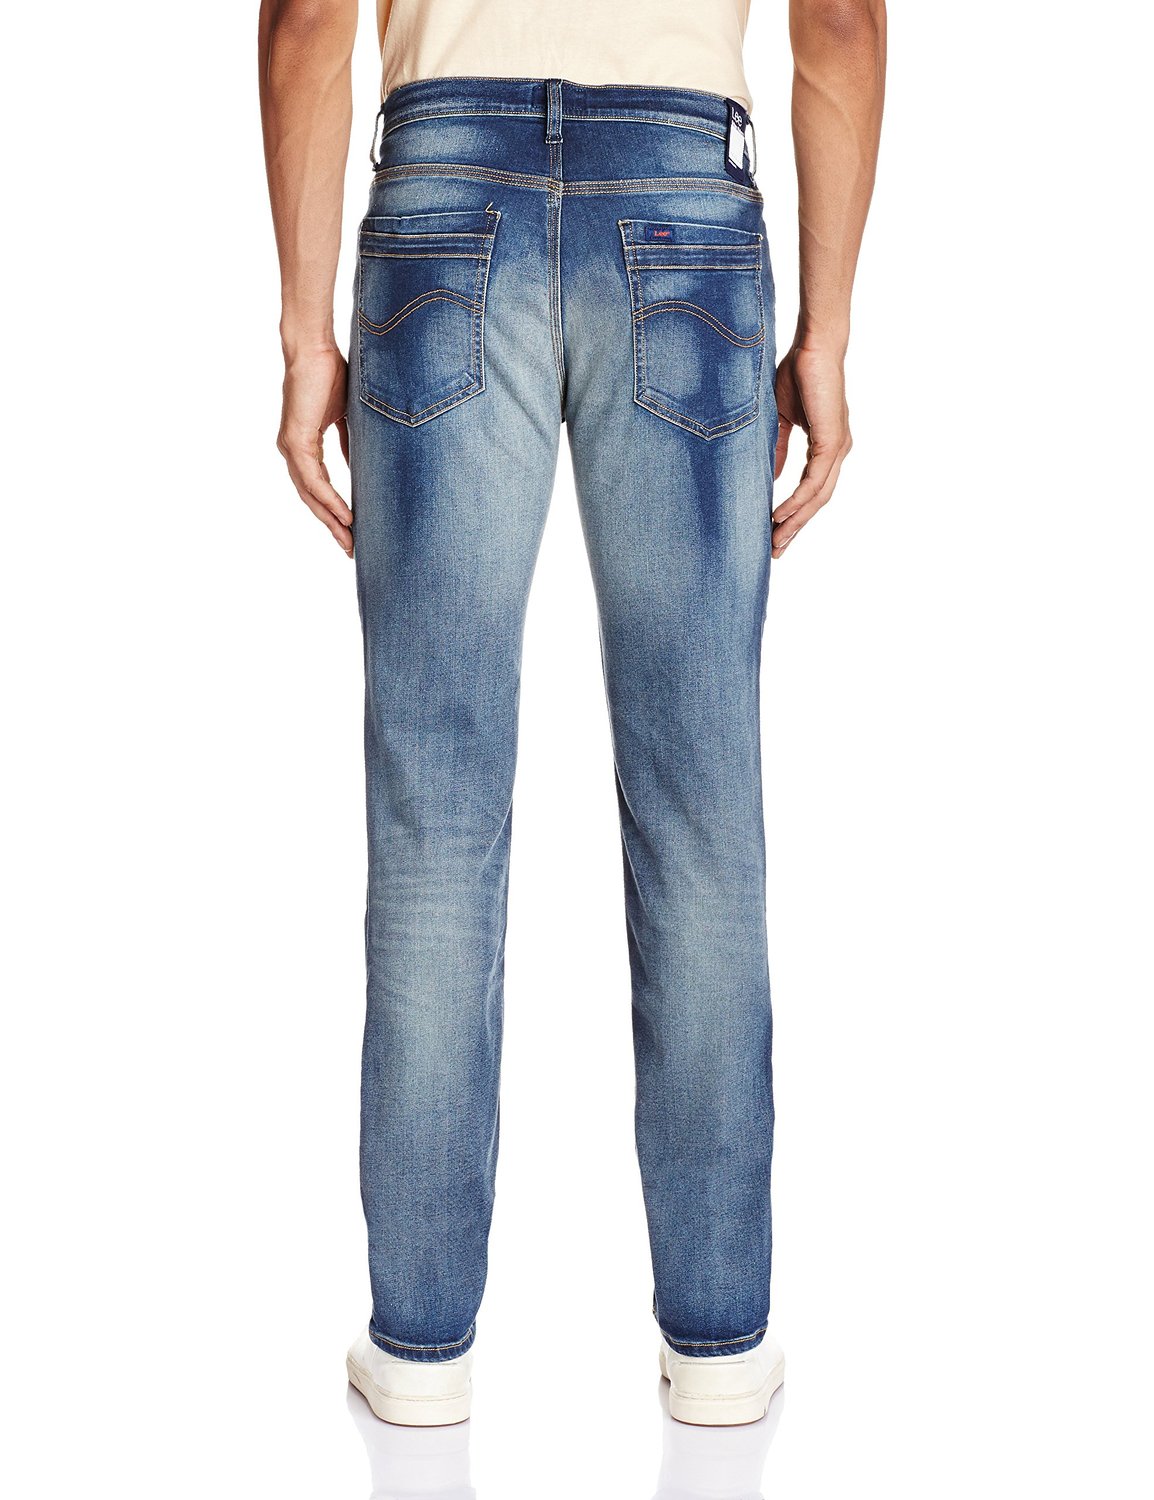 Buy Lee Men's Blue Skinny Fit Jeans Online @ ₹1919 from ShopClues